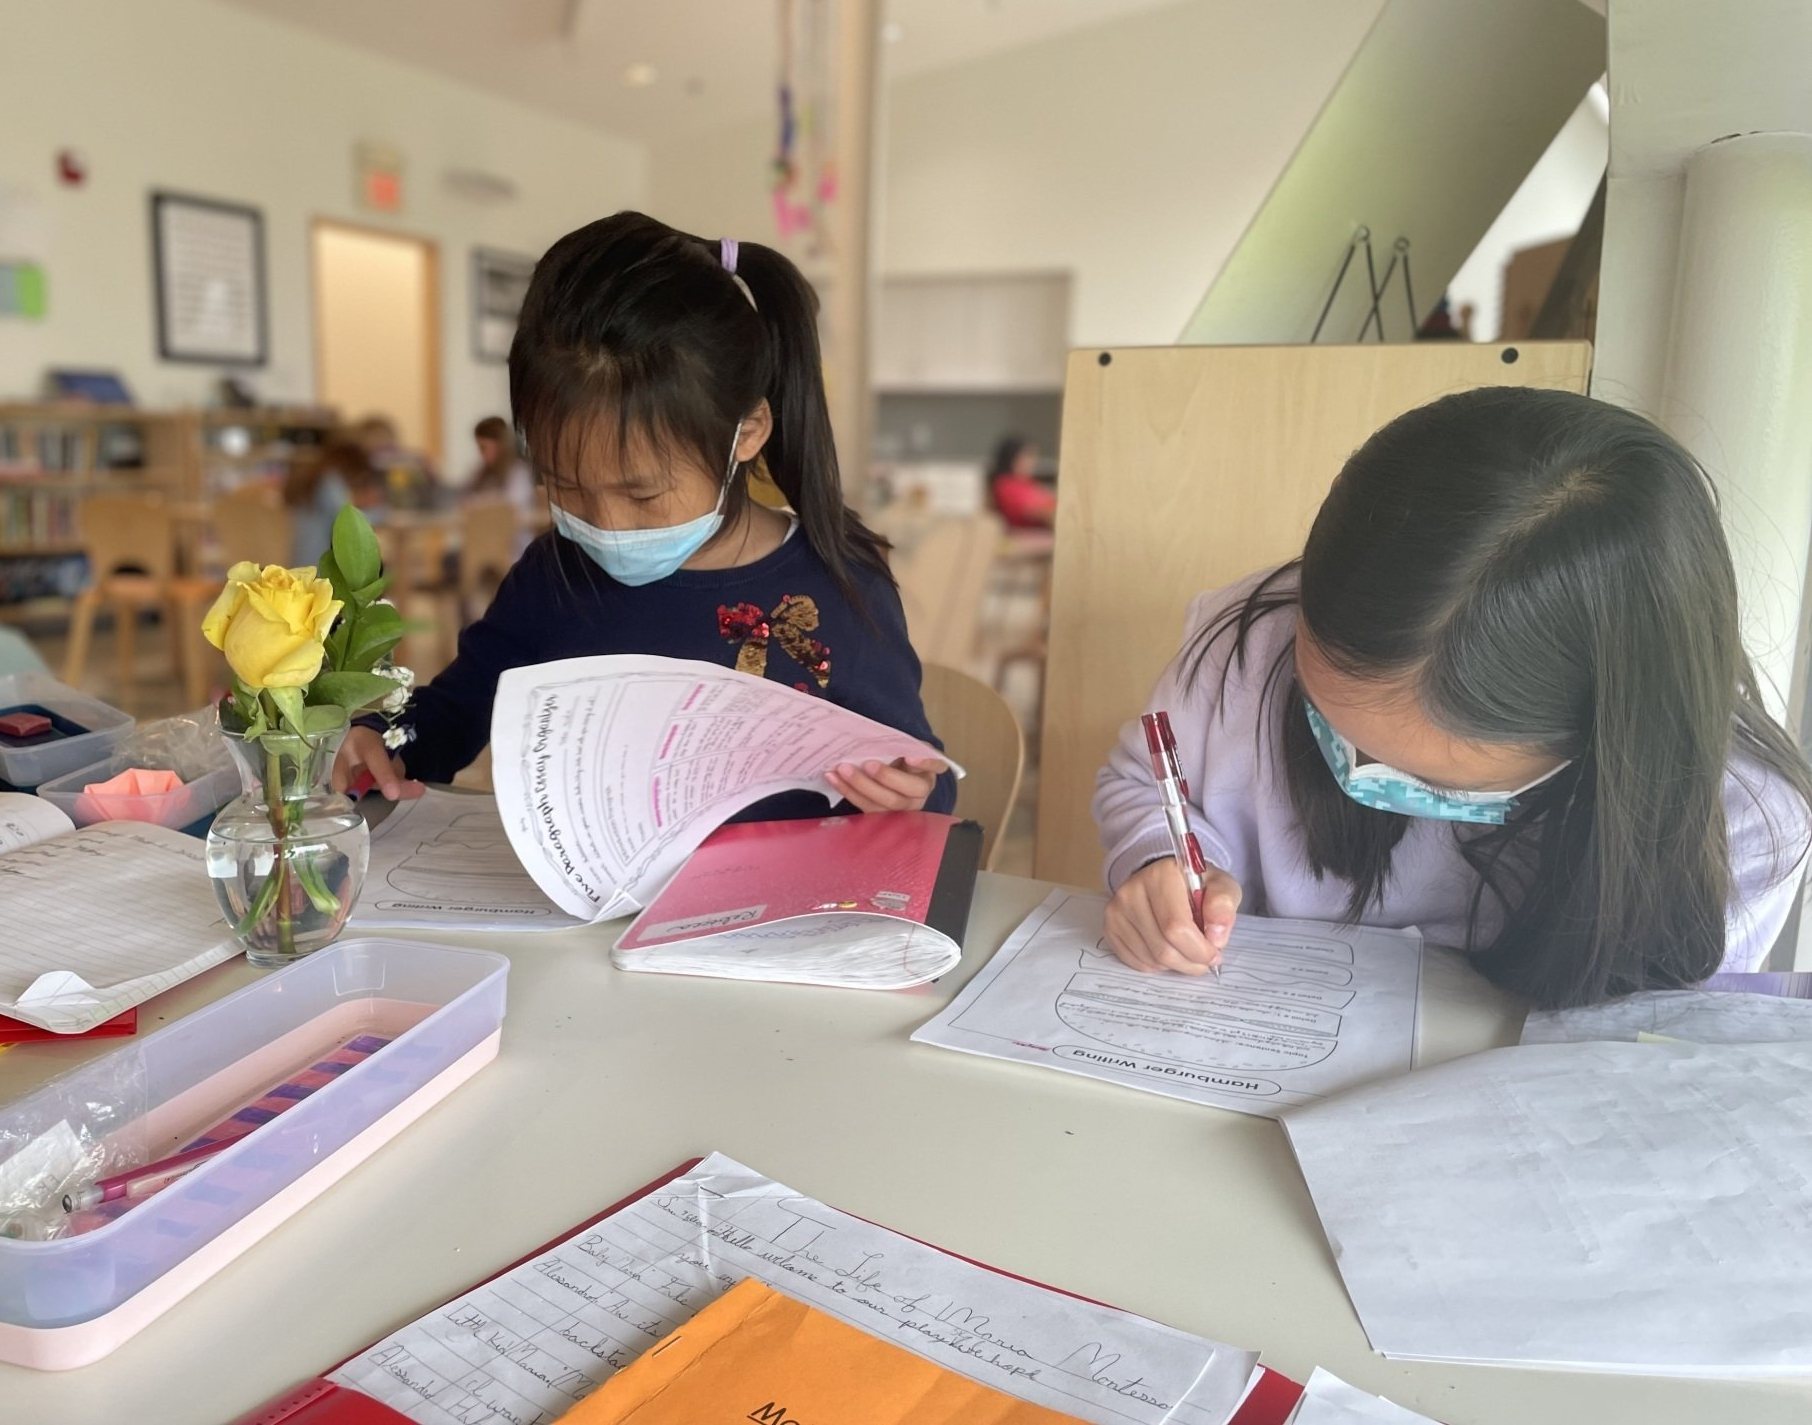 Children working in the classroom